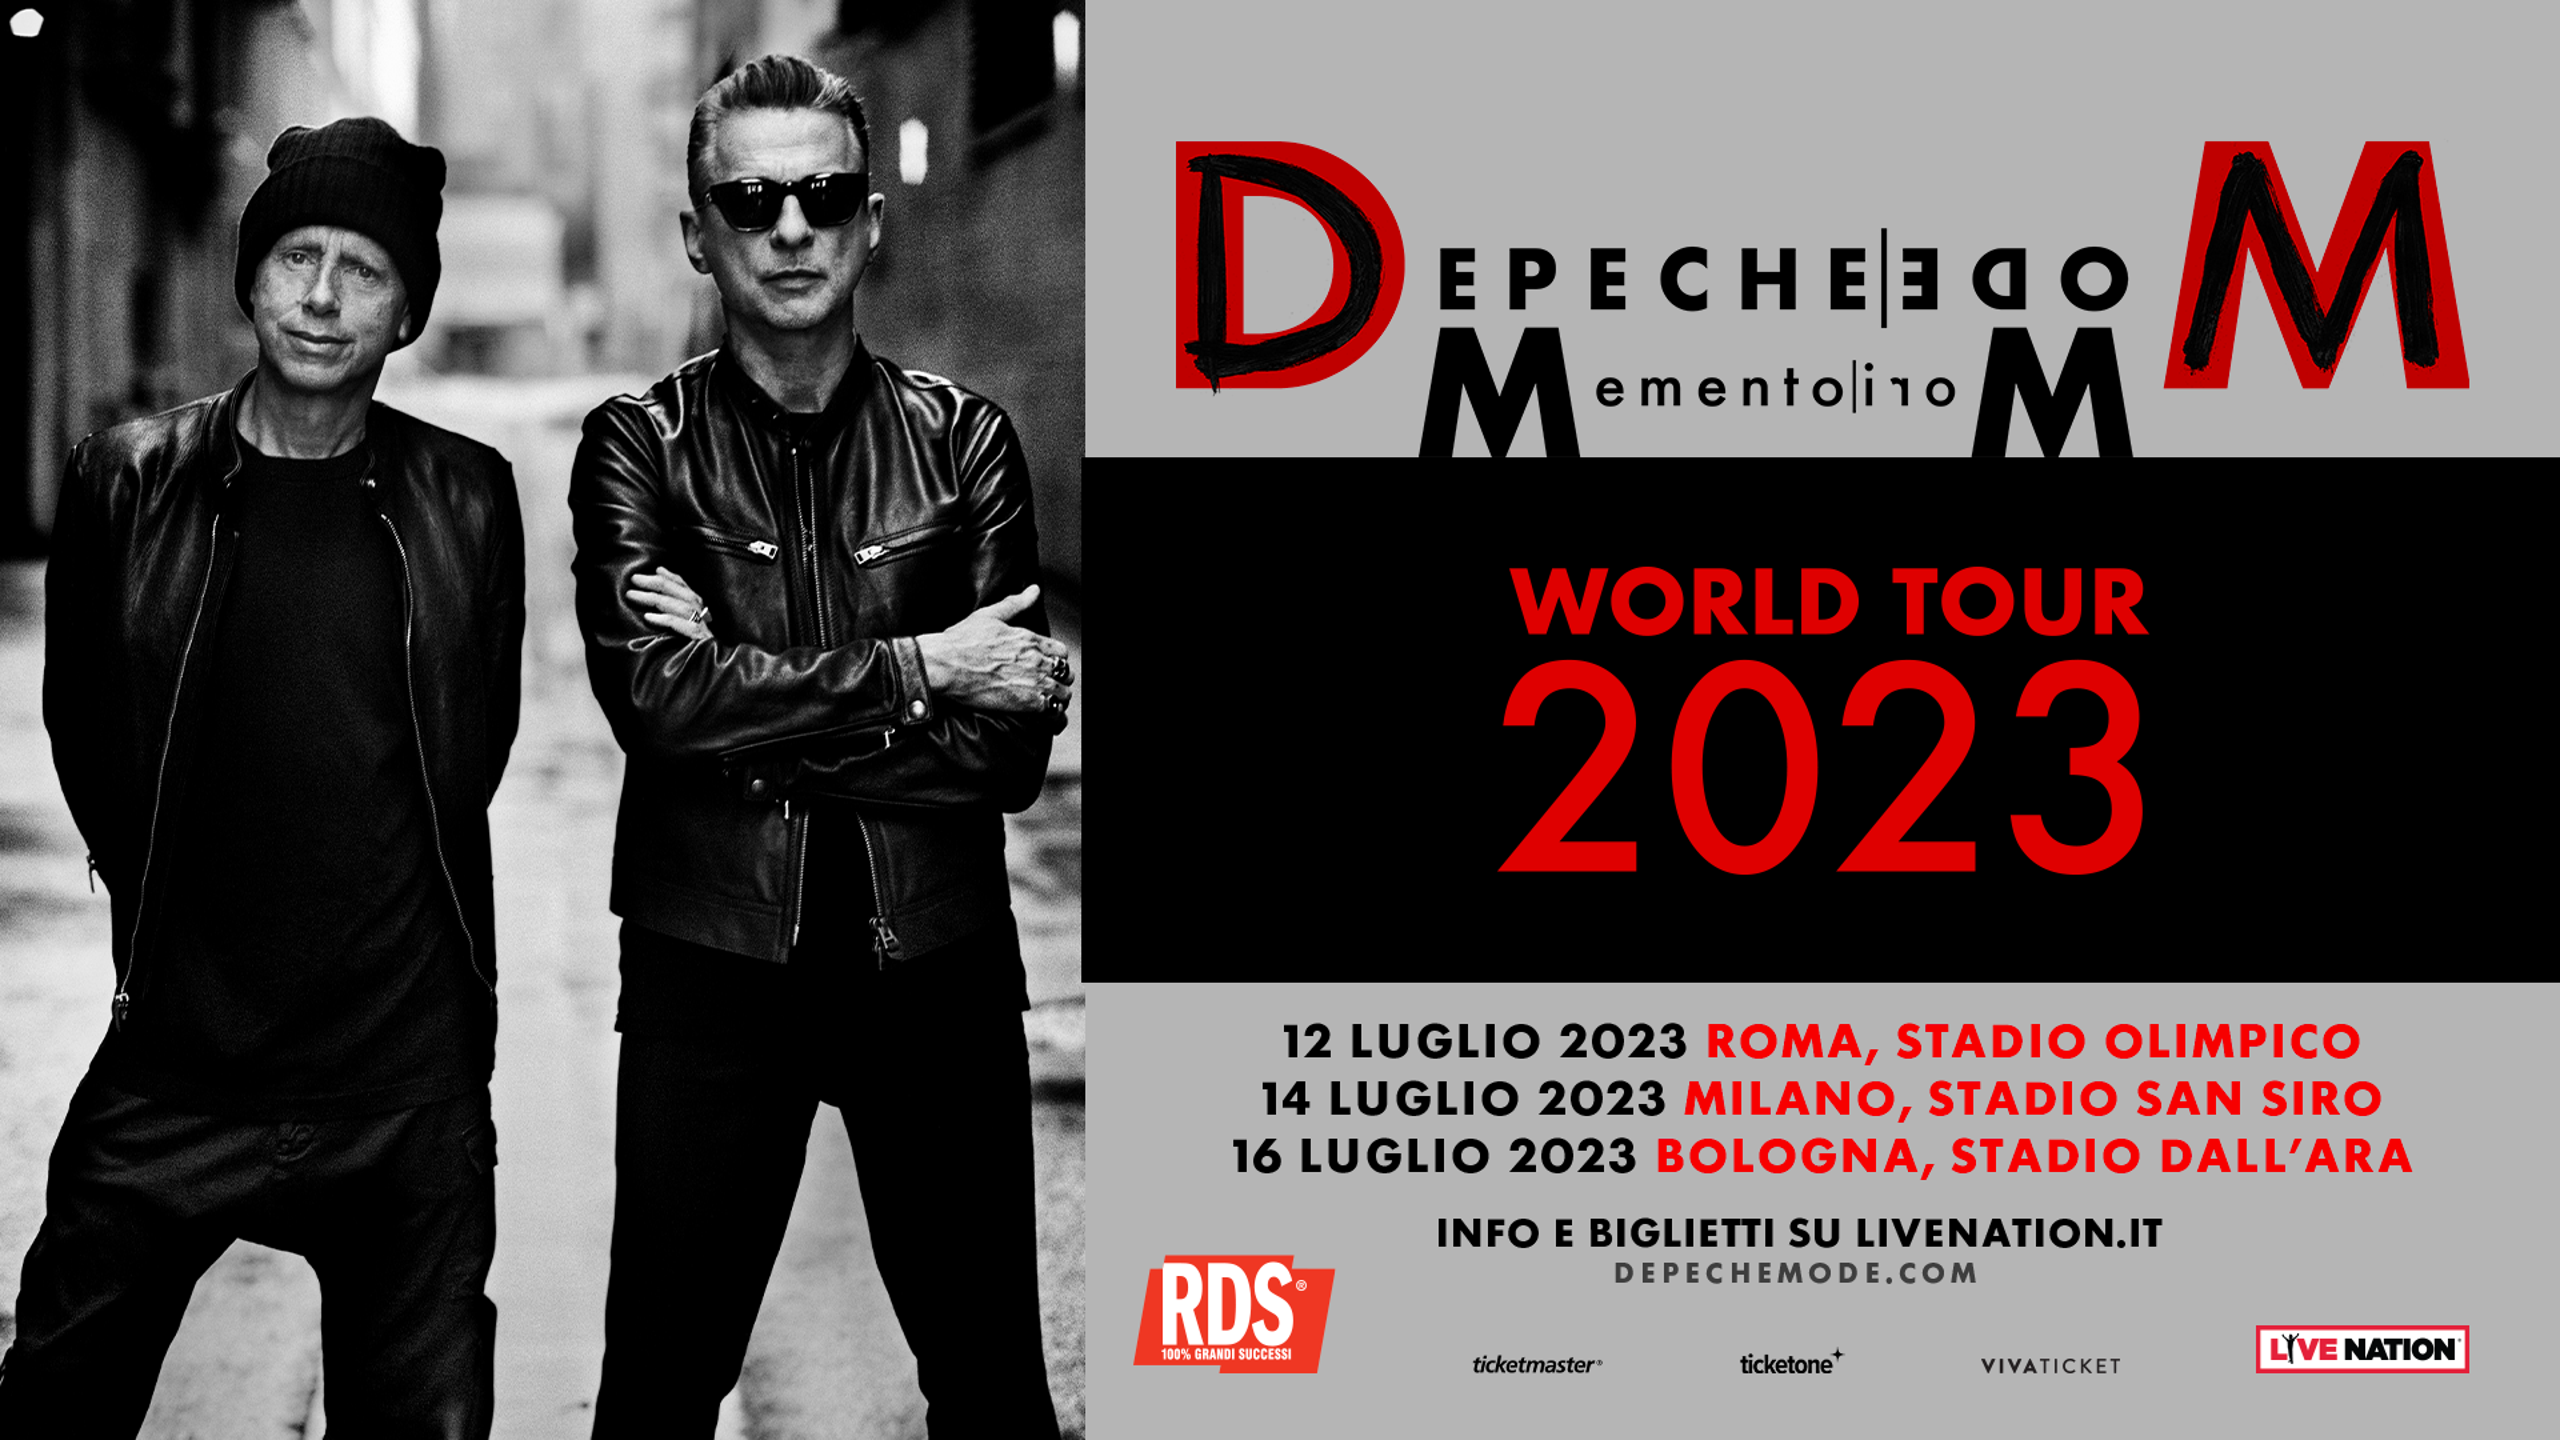 Depeche Mode concert tickets for San Siro, Milan Friday, 14 July 2023